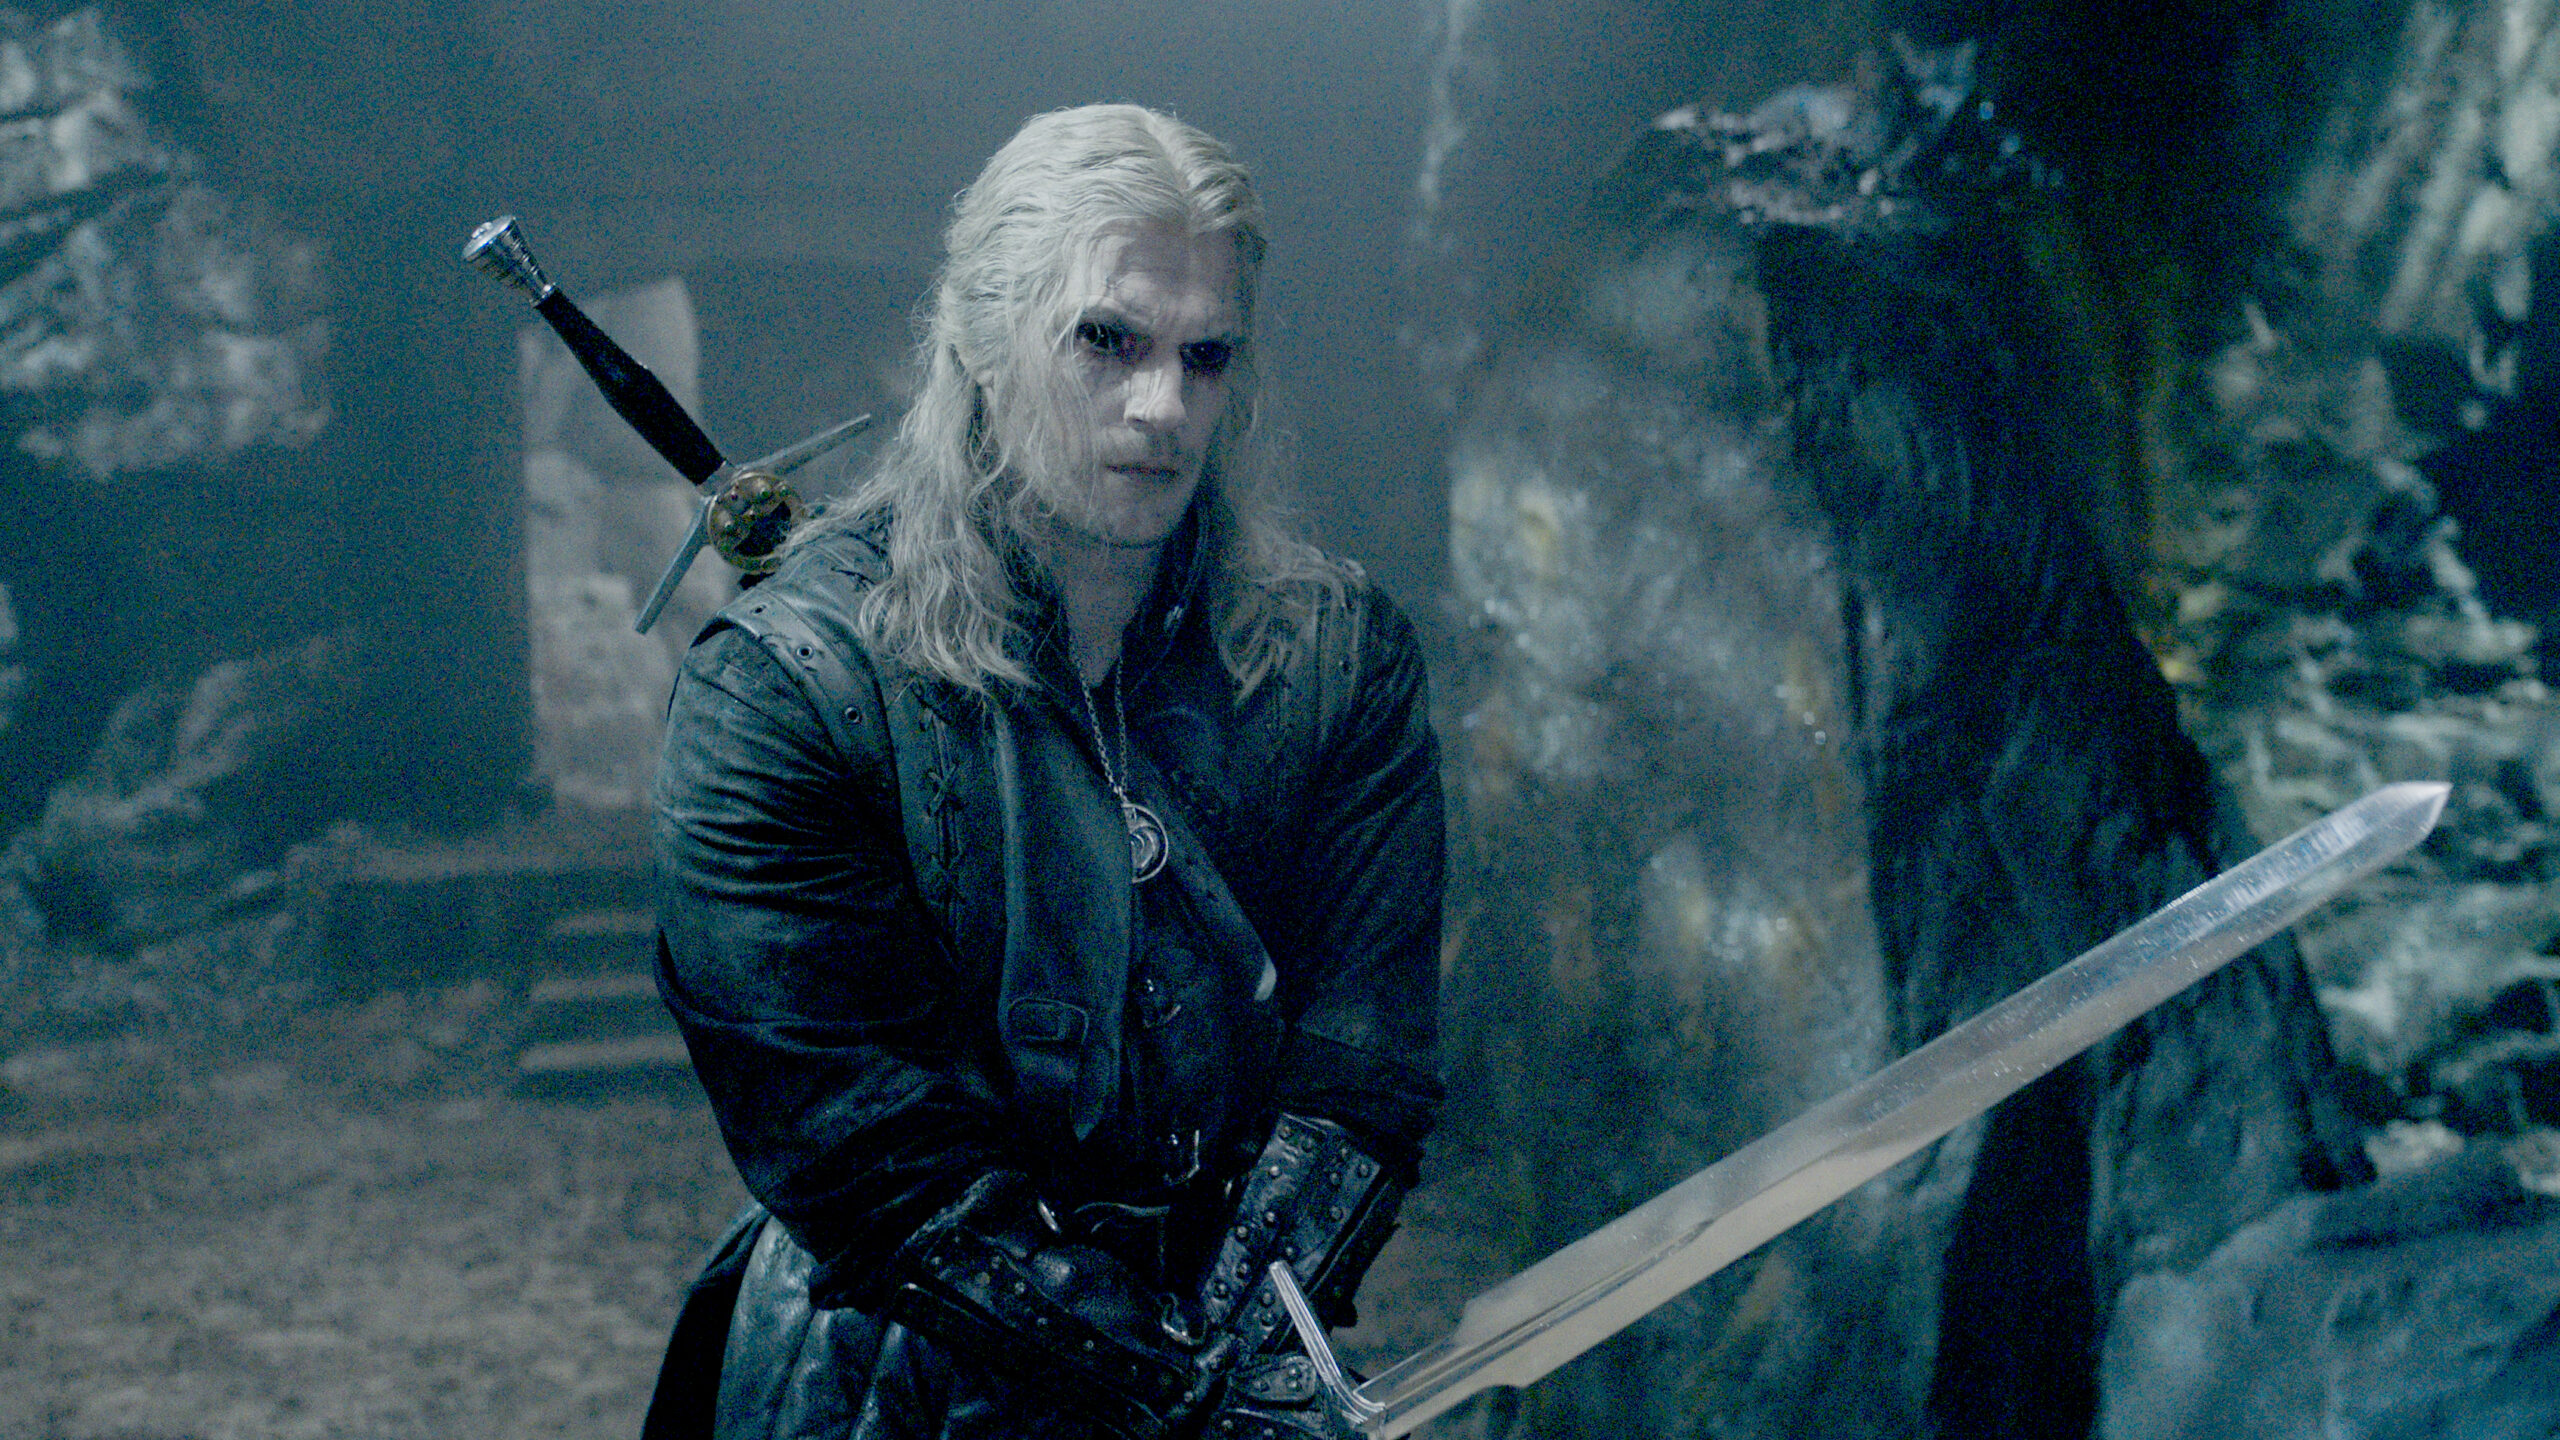 Geralt (Henry Cavill) taps into his Witcher abilities in The Witcher Season 3 Episode 1 "Shaerrawedd" (2023), Netflix